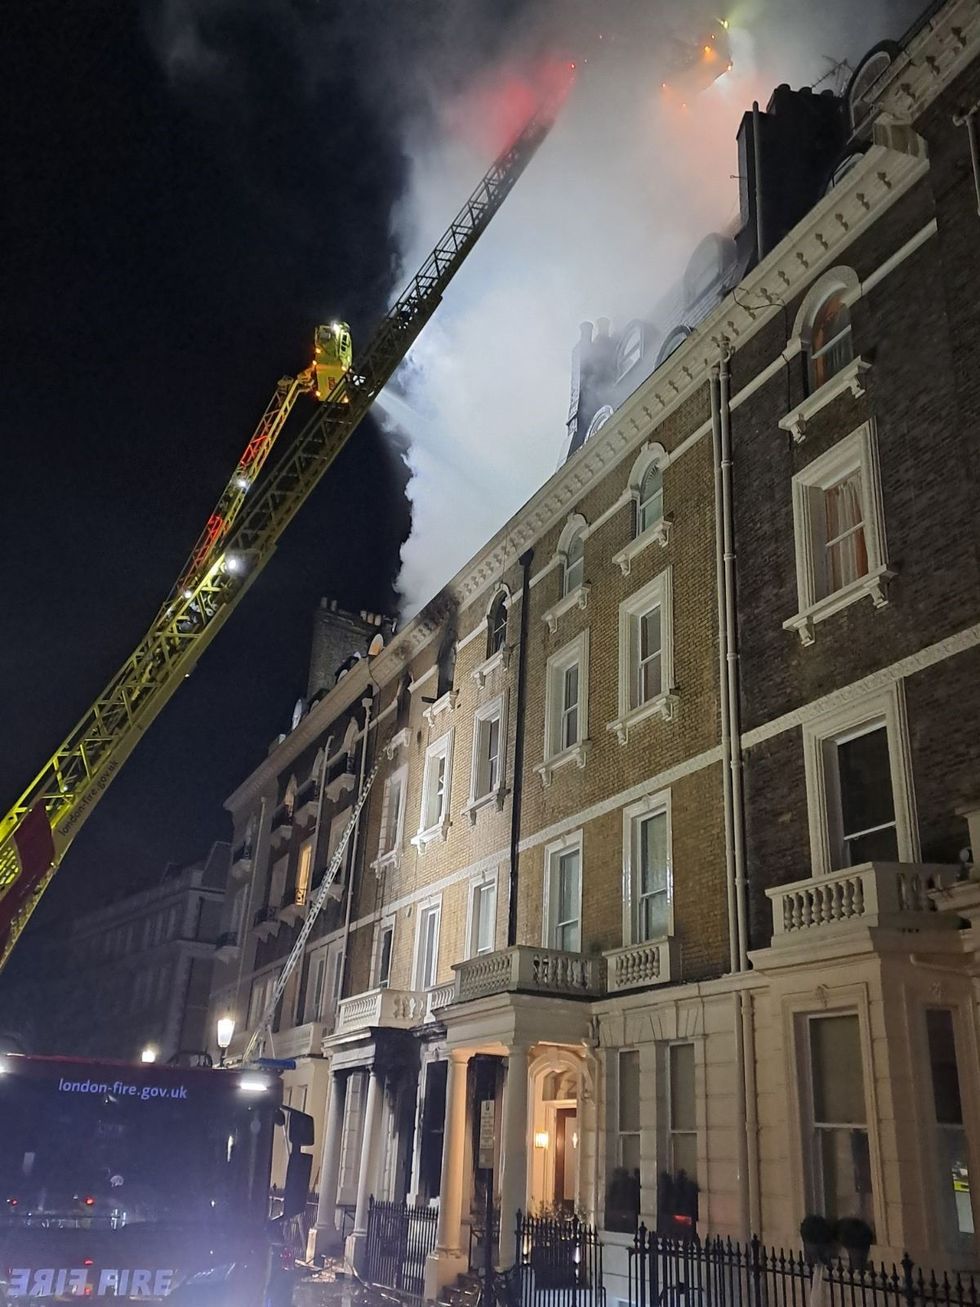 Plumes of smoke soared into the London night sky